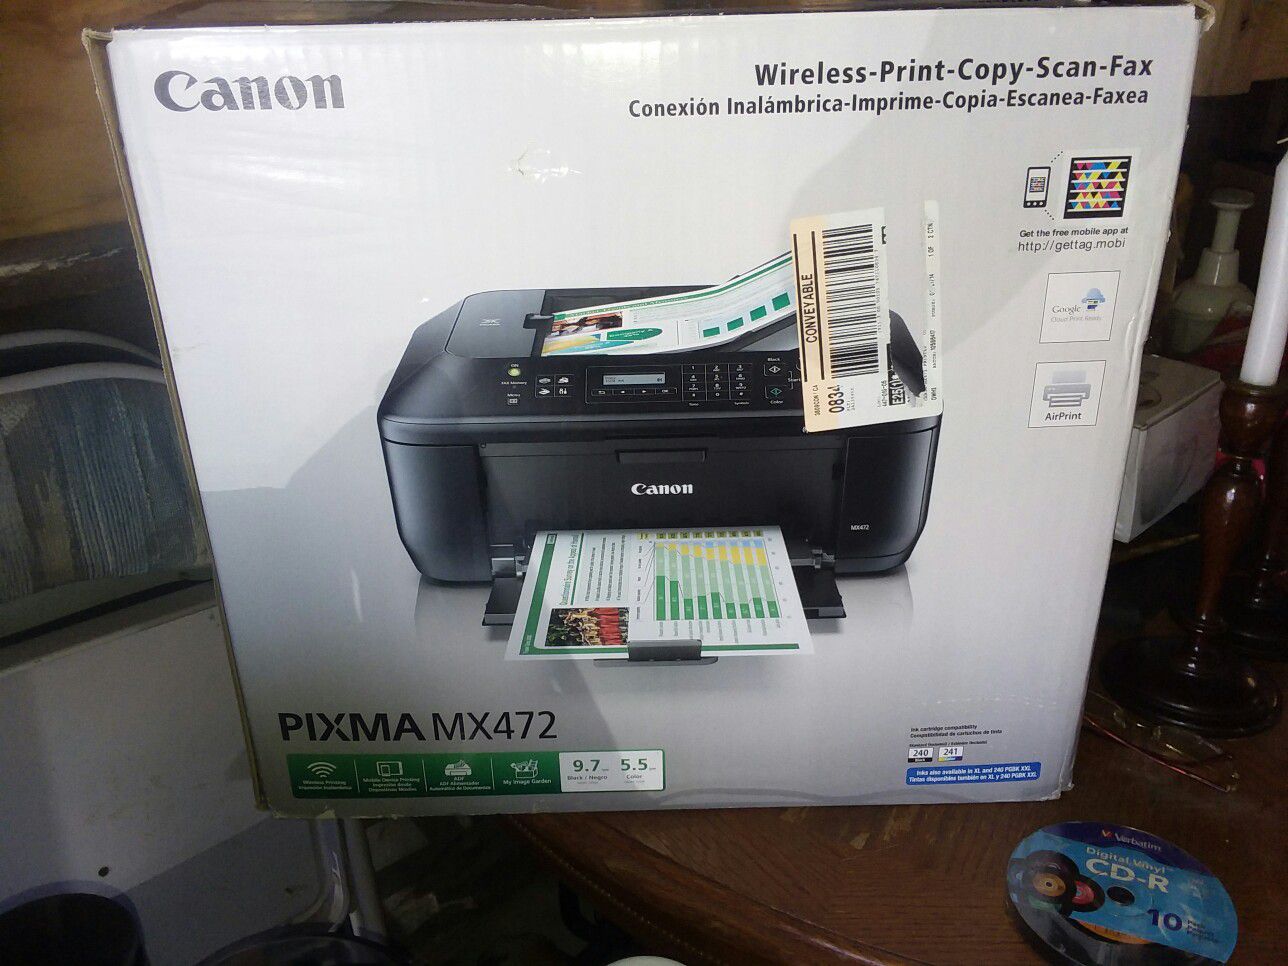 Wireless printer